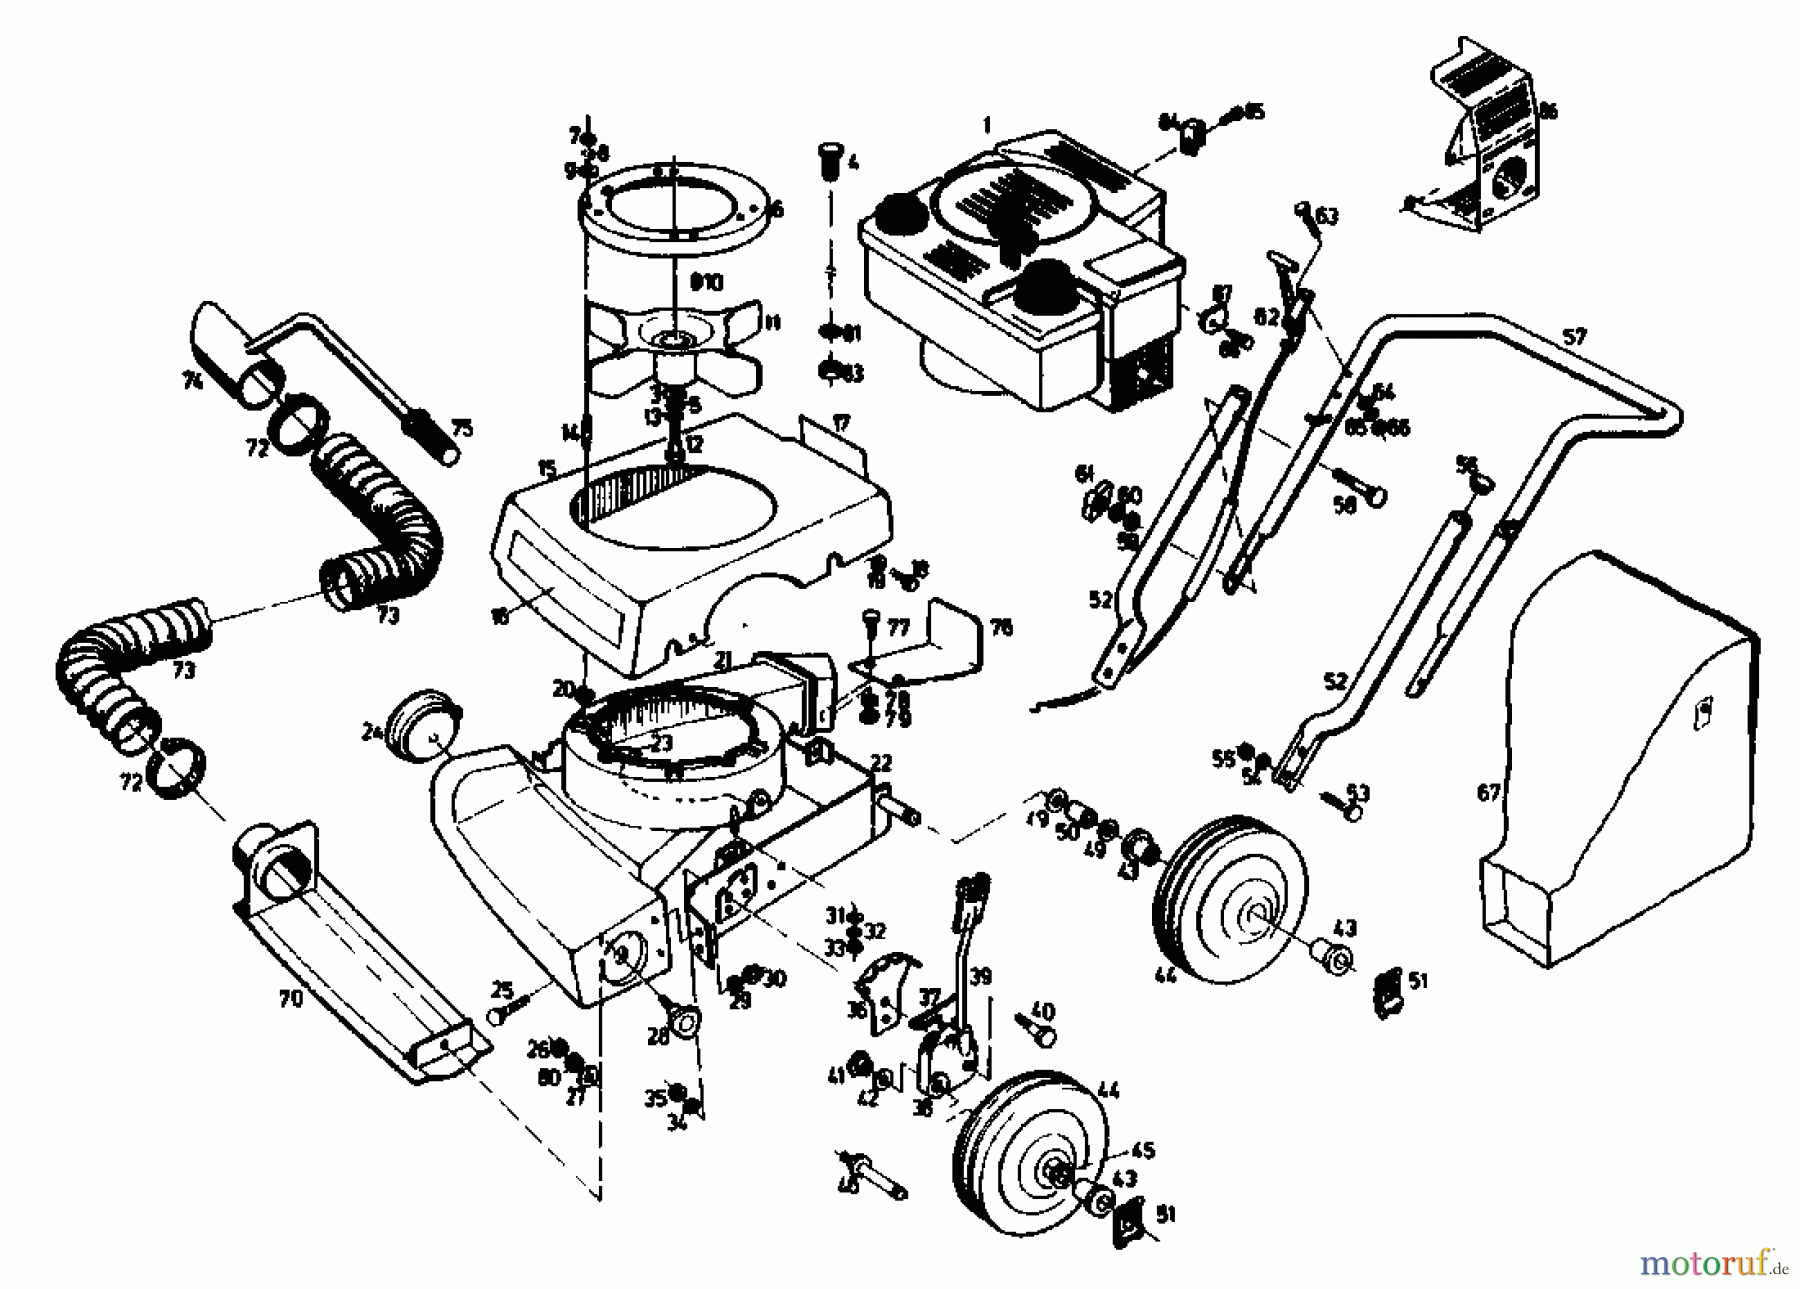  Gutbrod Souffleur de feuille, Aspirateur de feuille LB 55-45 02871.01  (1989) Machine de base